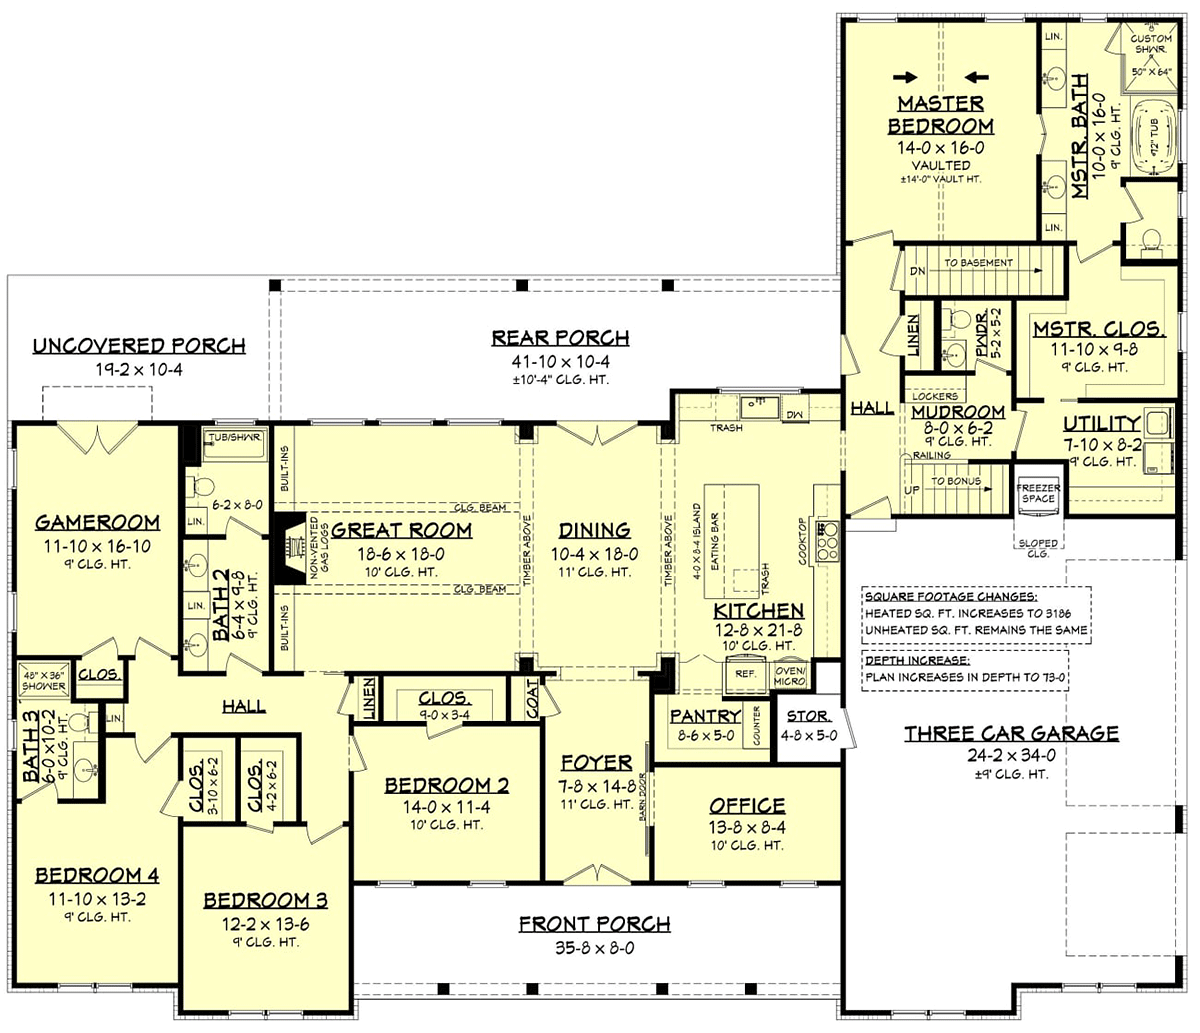 House Plan 56716 Alternate Level One